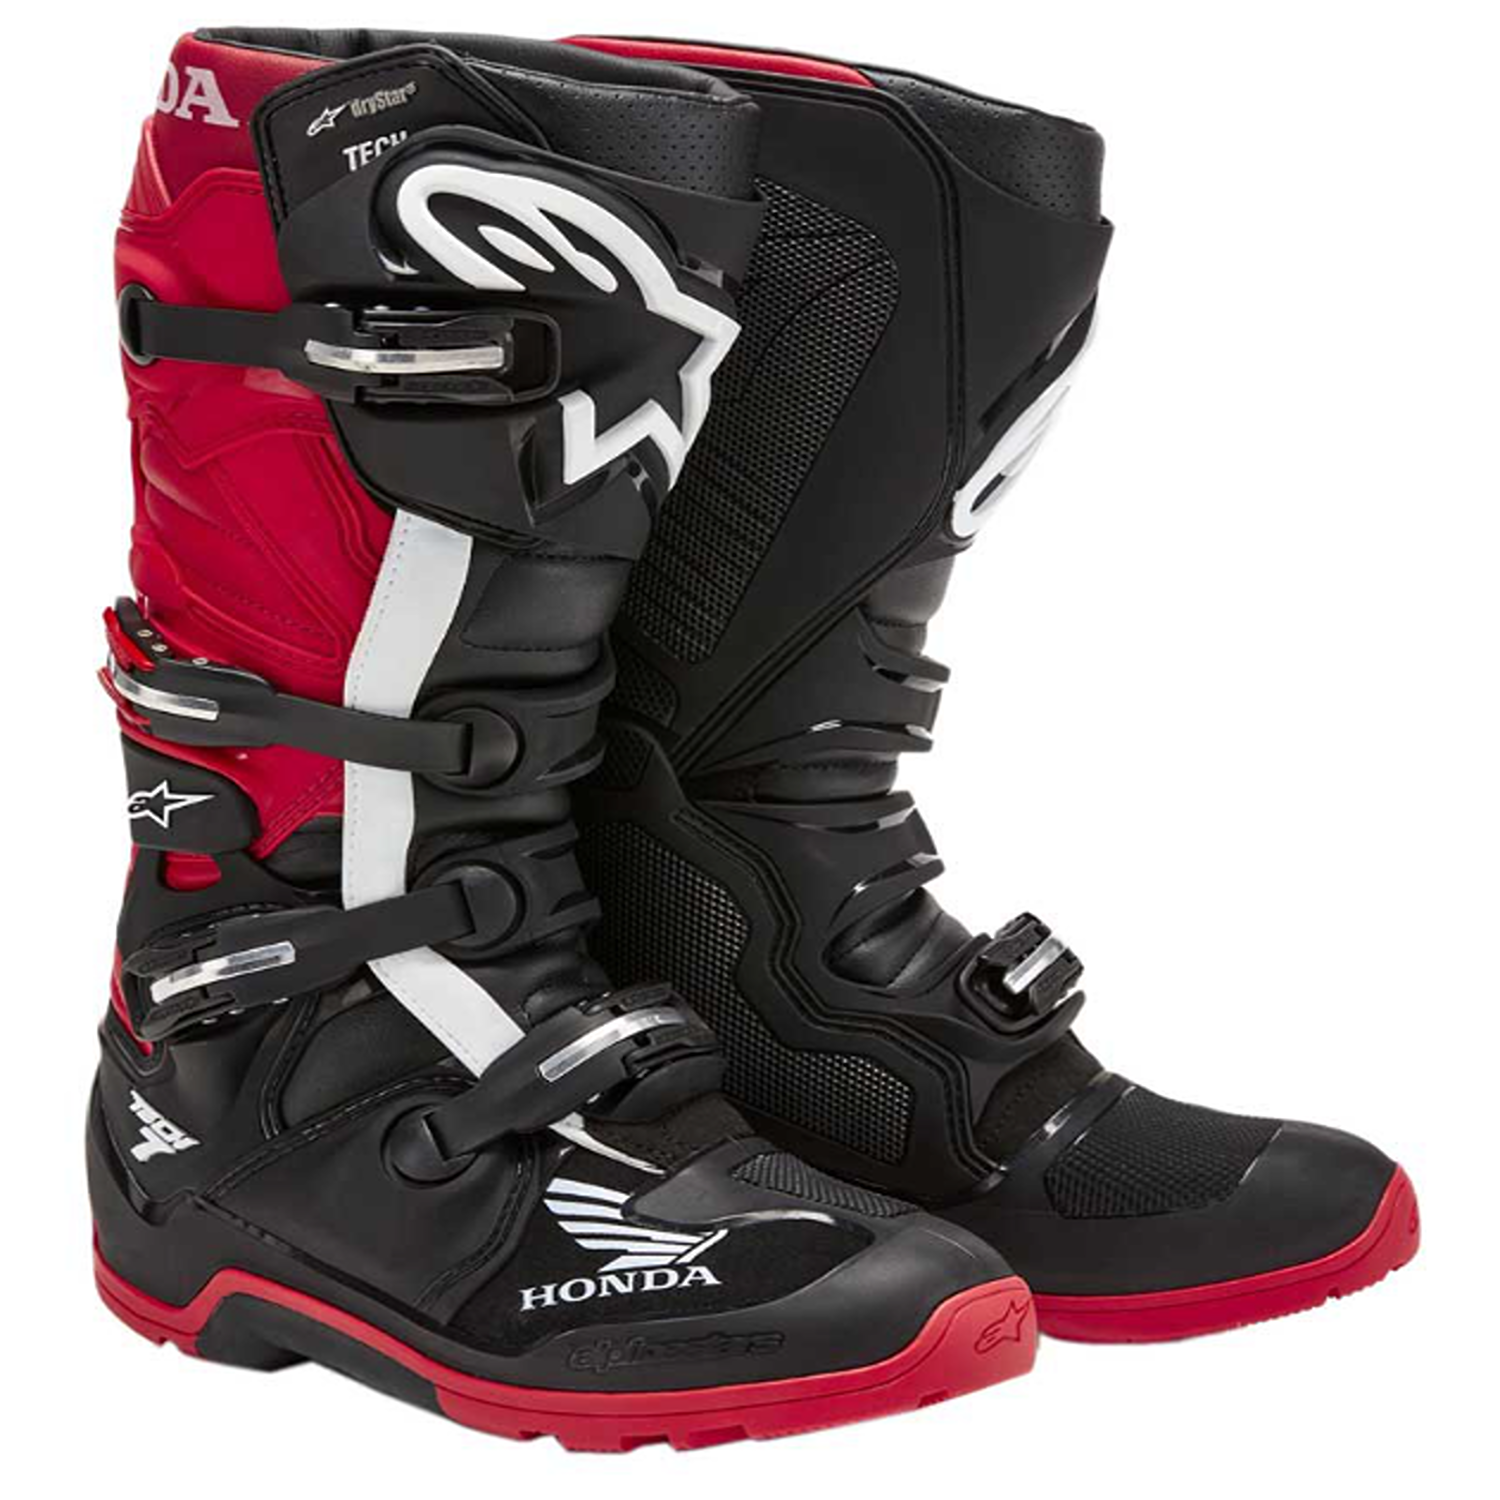 Image of Alpinestars Honda Tech 7 Enduro Drystar Boots Black Bright Red Size US 13 ID 8059347155555